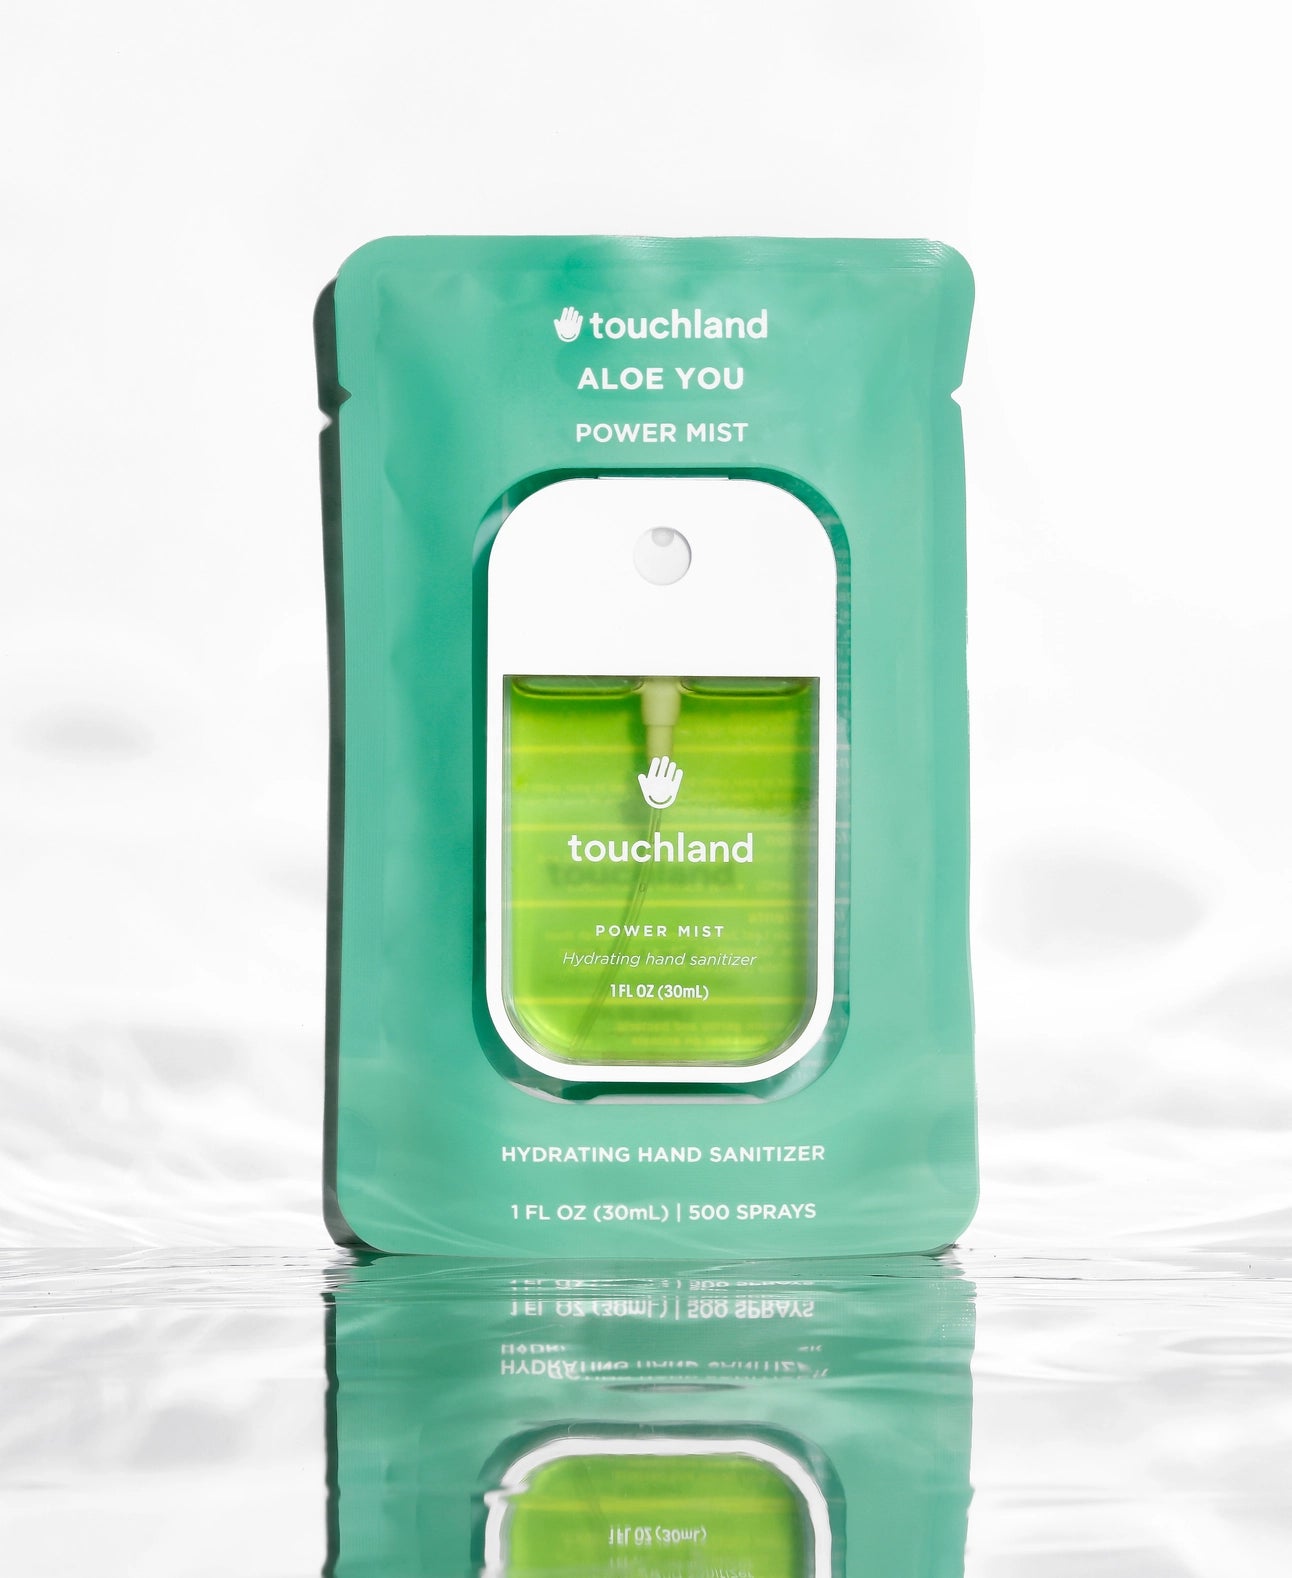 Touchland Power Mist Hand Sanitizer - Aloe You